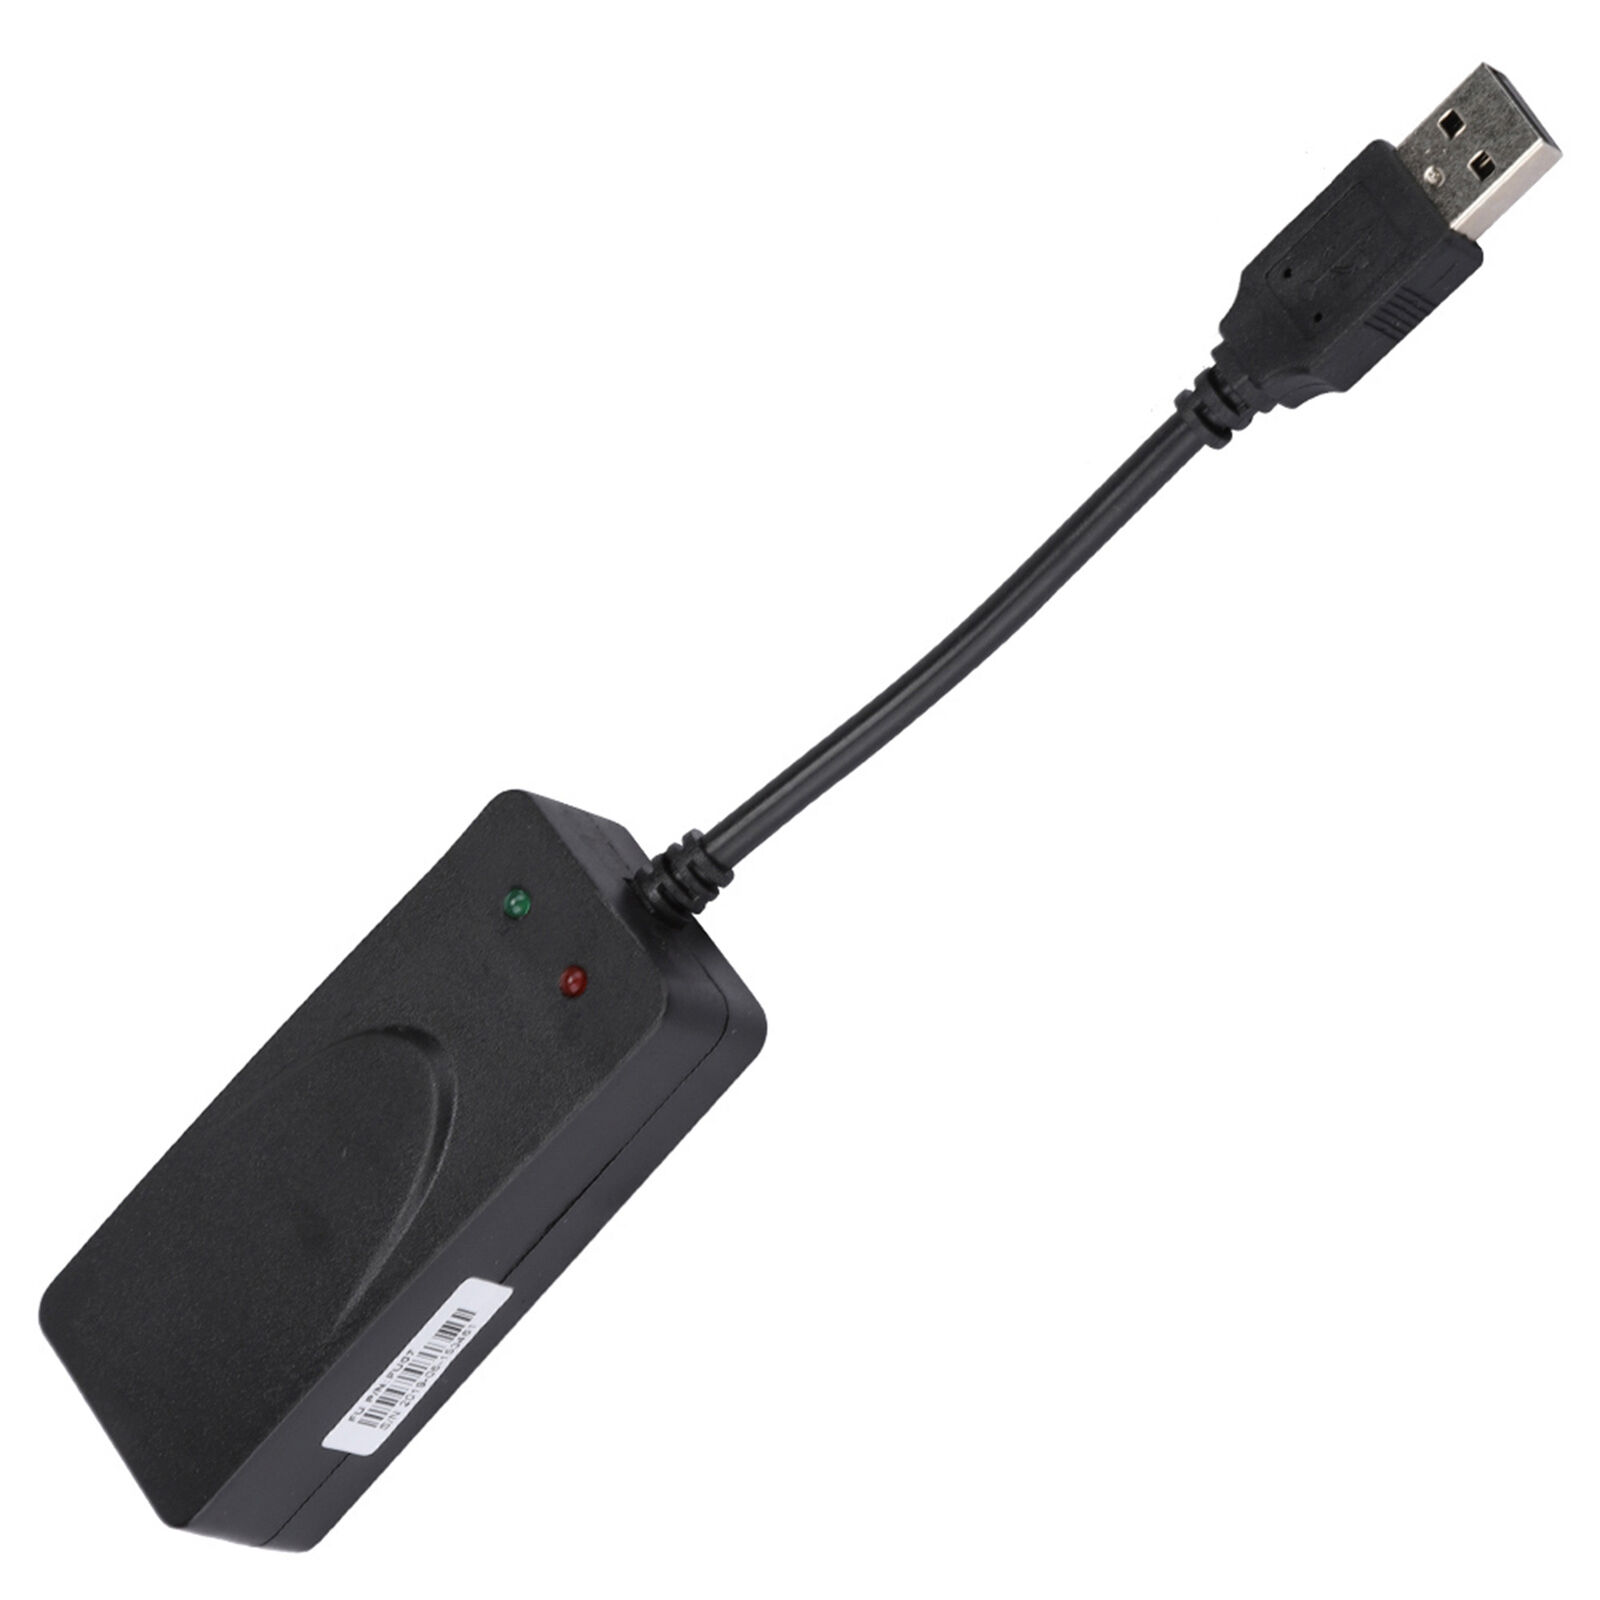 Fax Modem Dual Port USB2.0 56K External Modem Driver Plug And Play For Win7/ BEA